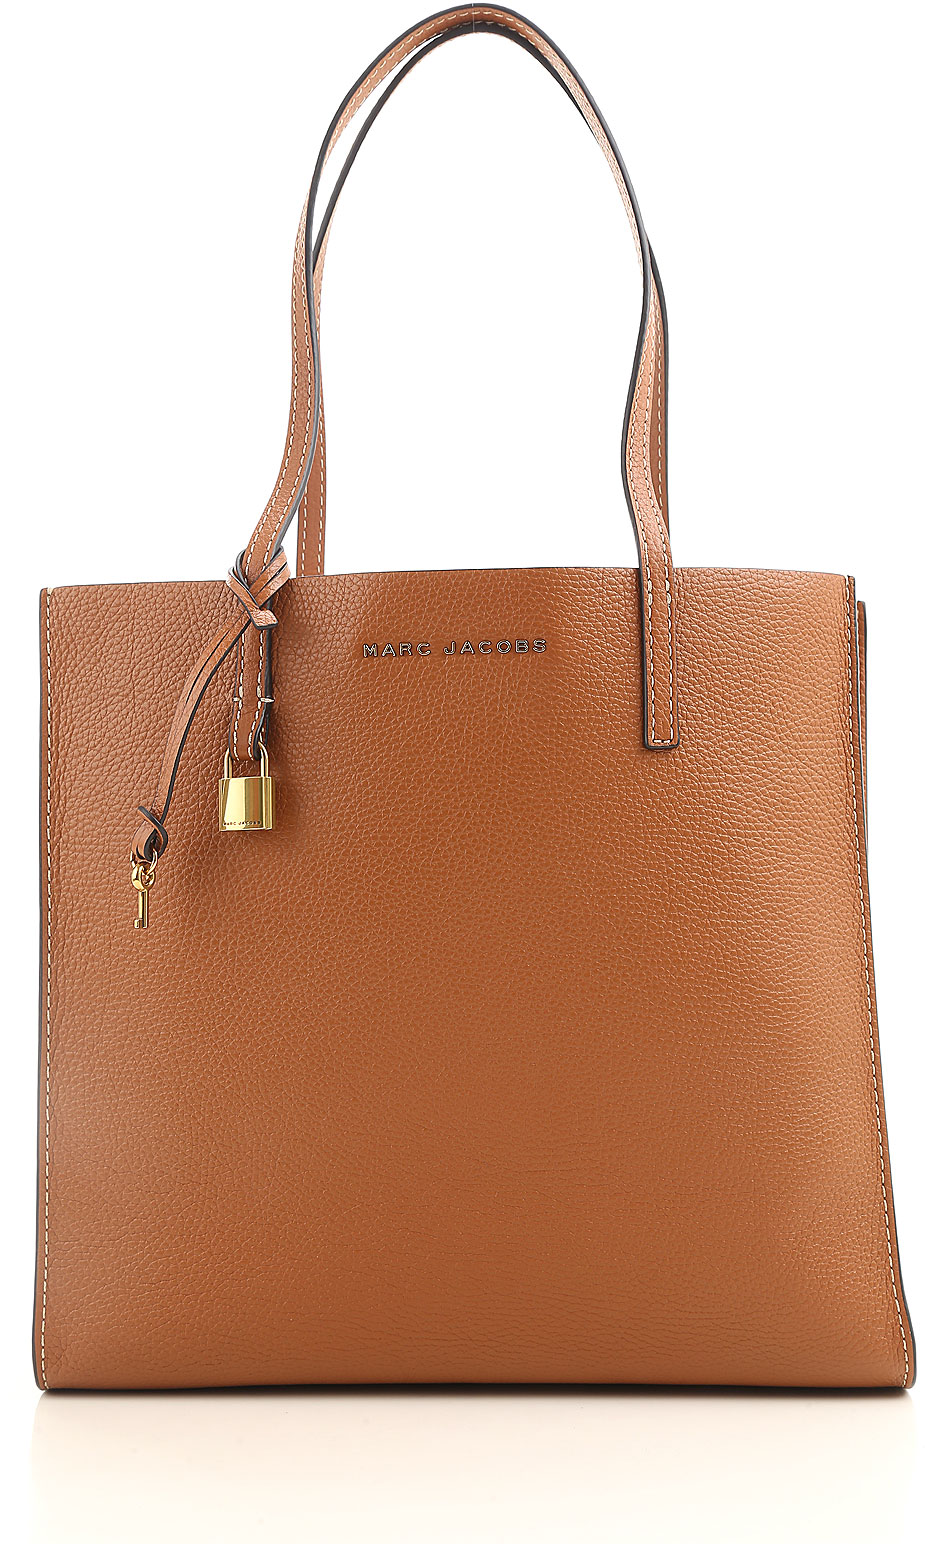 Handbags Marc Jacobs, Style code: m0012669-221-